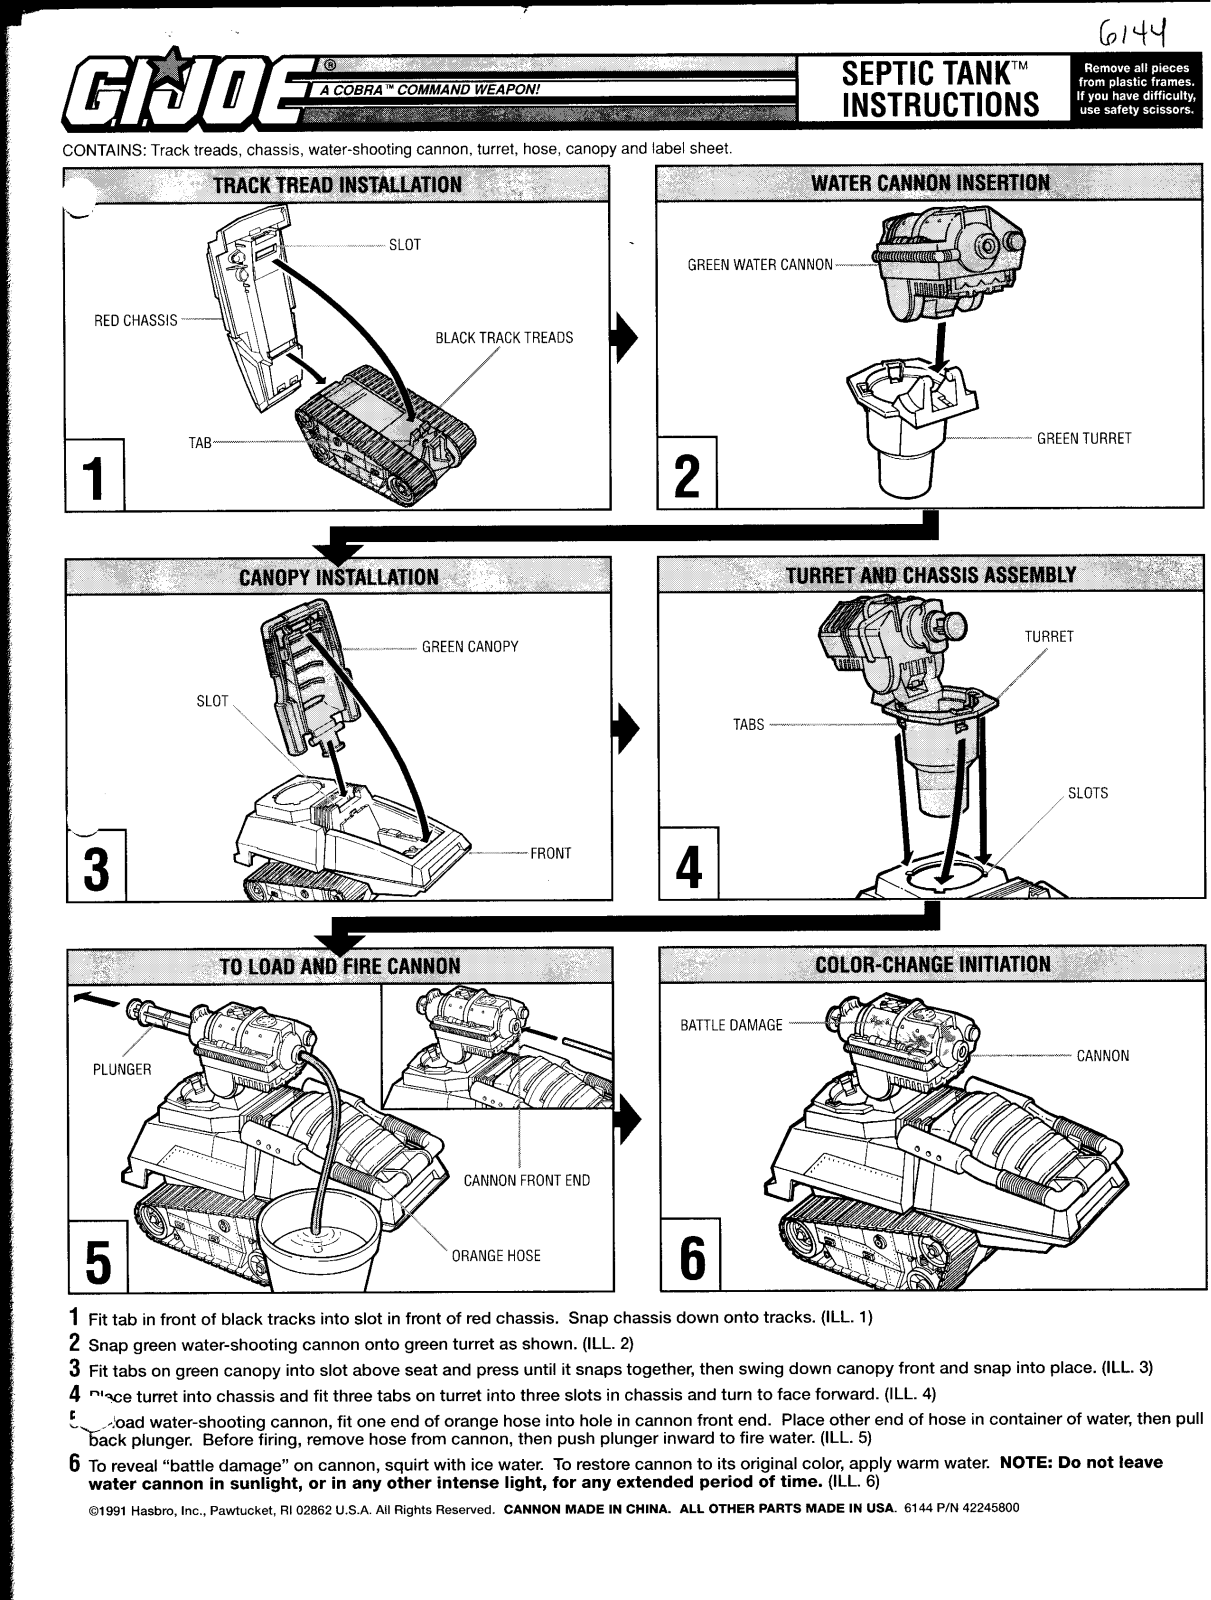 HASBRO GiJoe Septic Tank User Manual